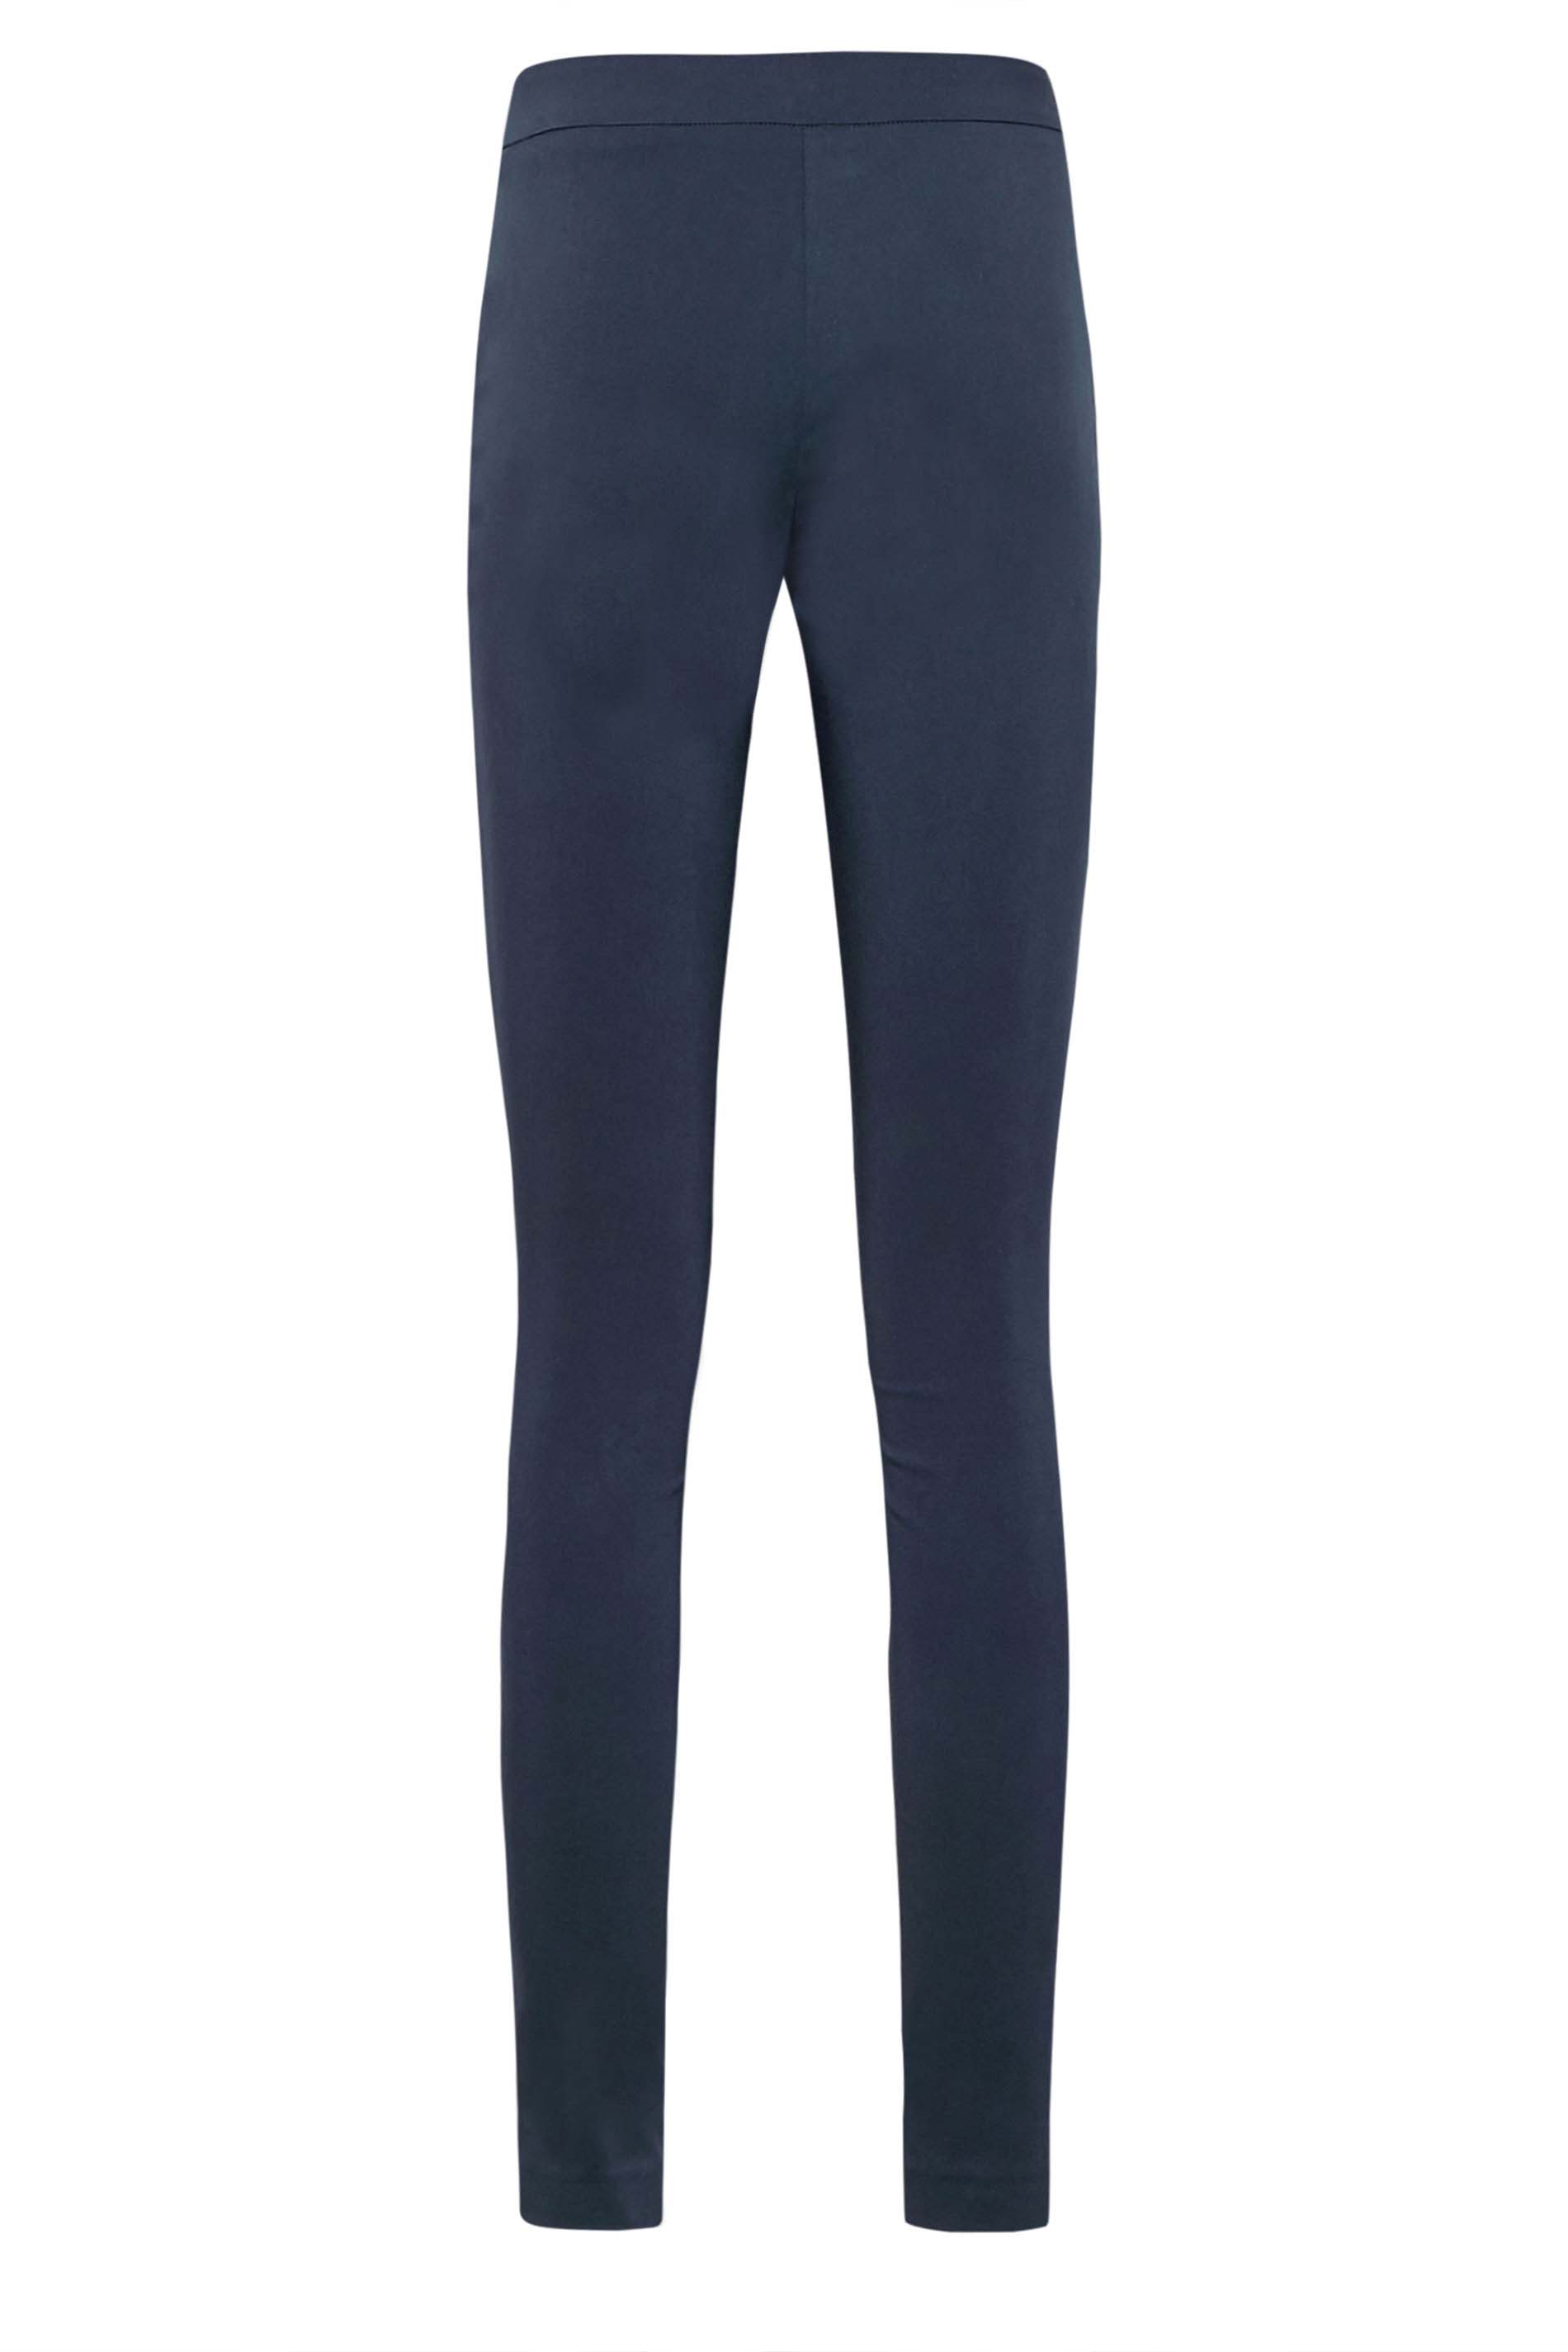 LTS Tall Women's Navy Blue Stretch Skinny Leg Trousers | Long Tall Sally 3